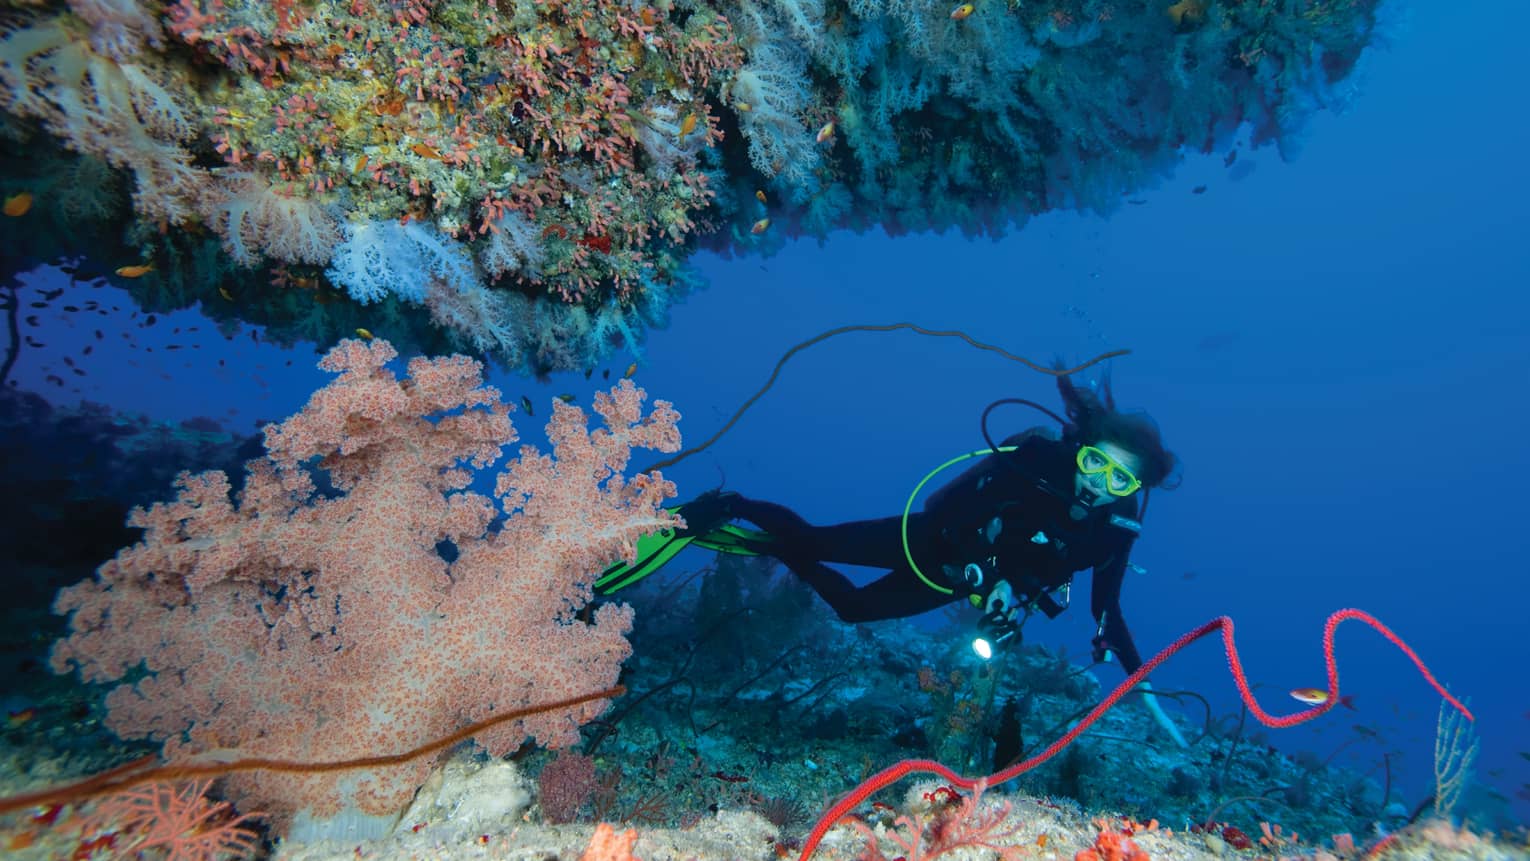 Scuba diver swims through colourful coral, rocks under ocean